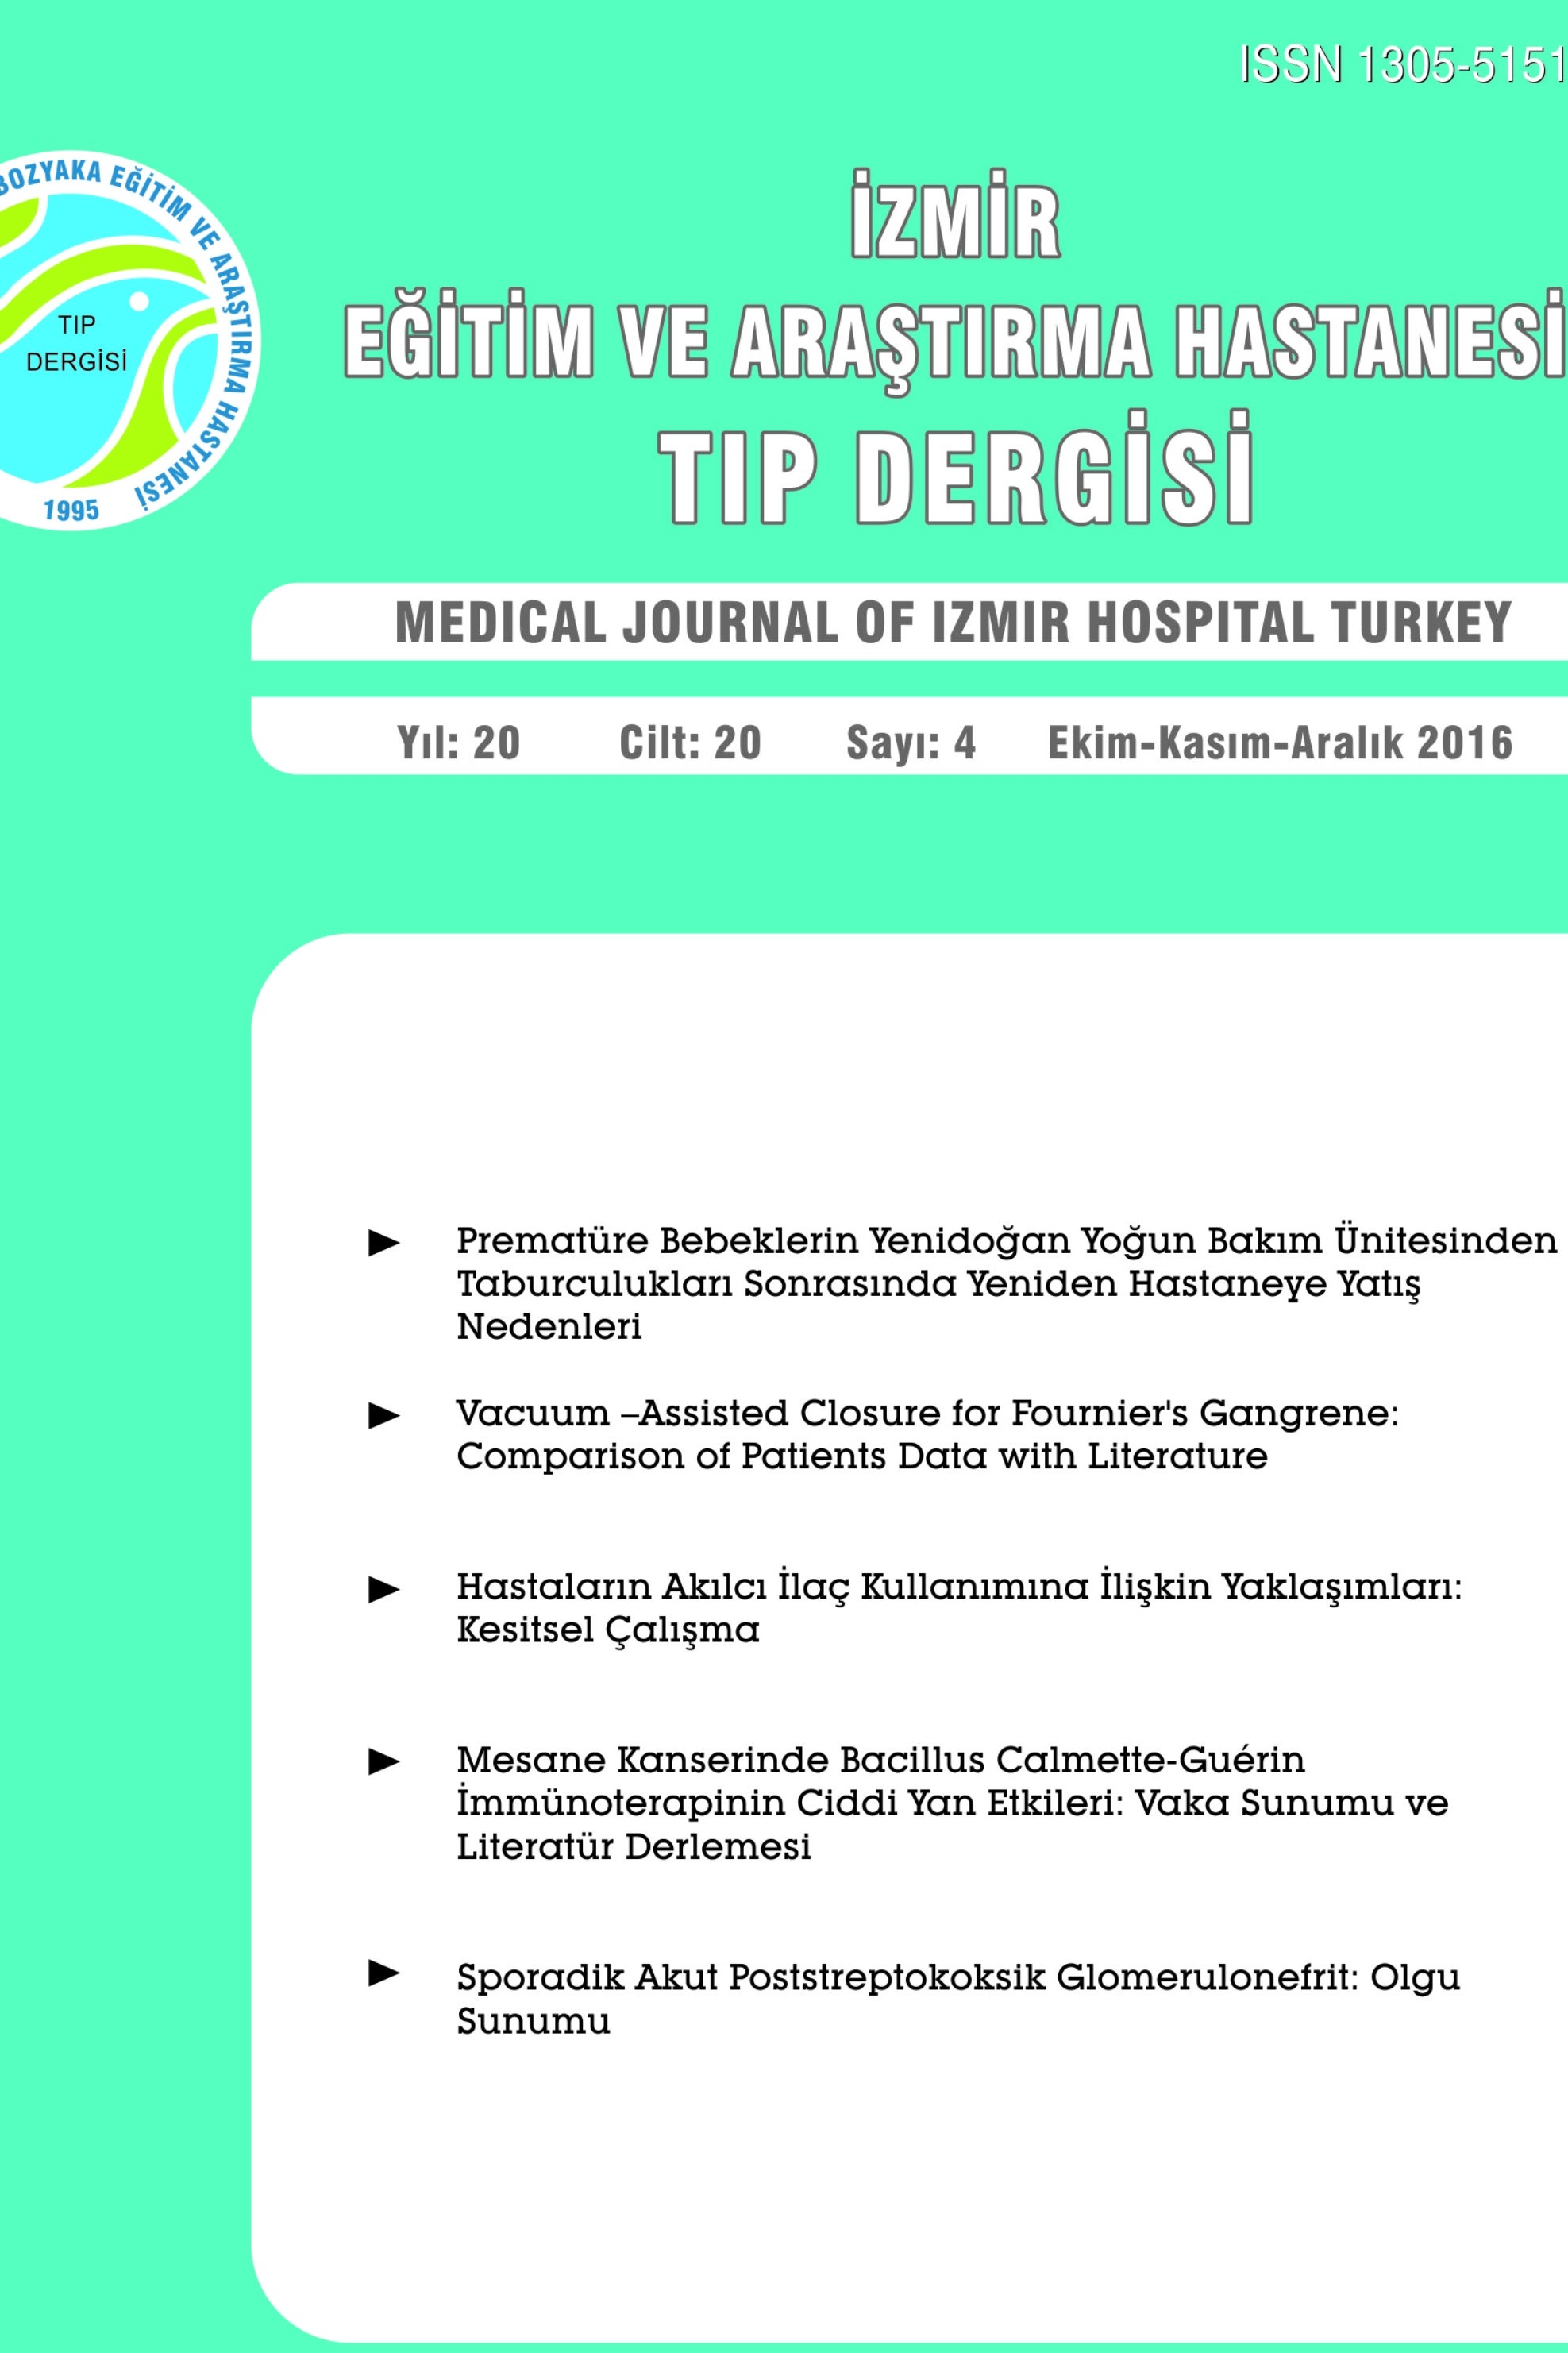 Medical Journal of Izmir Hospital